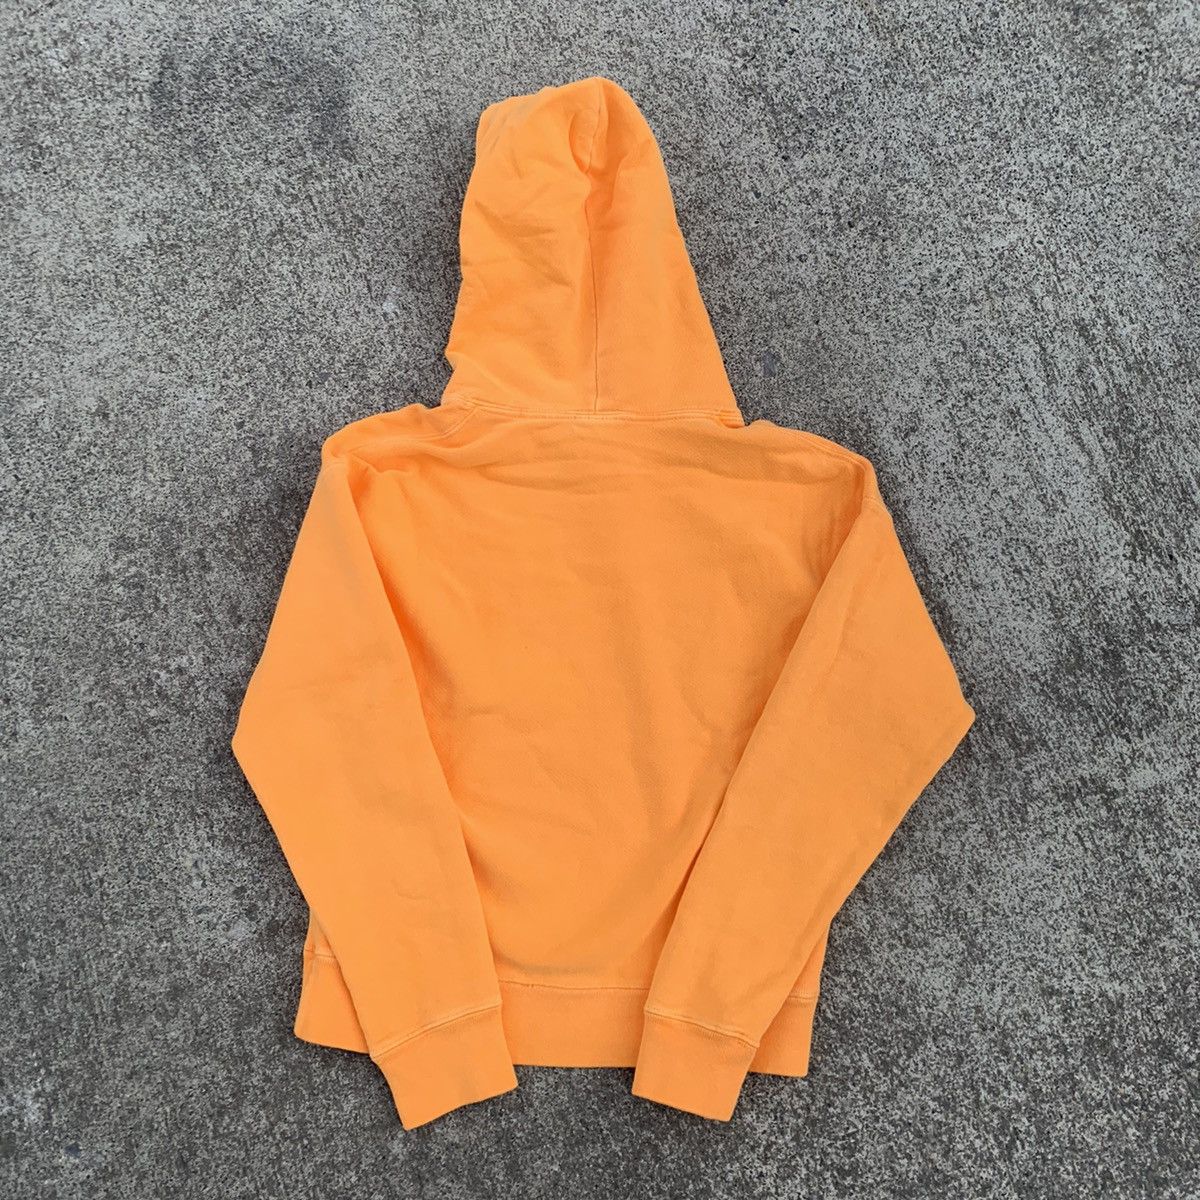 Champion Orange Champion Reverse Weave Hoodie Rare Color Size US S / EU 44-46 / 1 - 3 Thumbnail